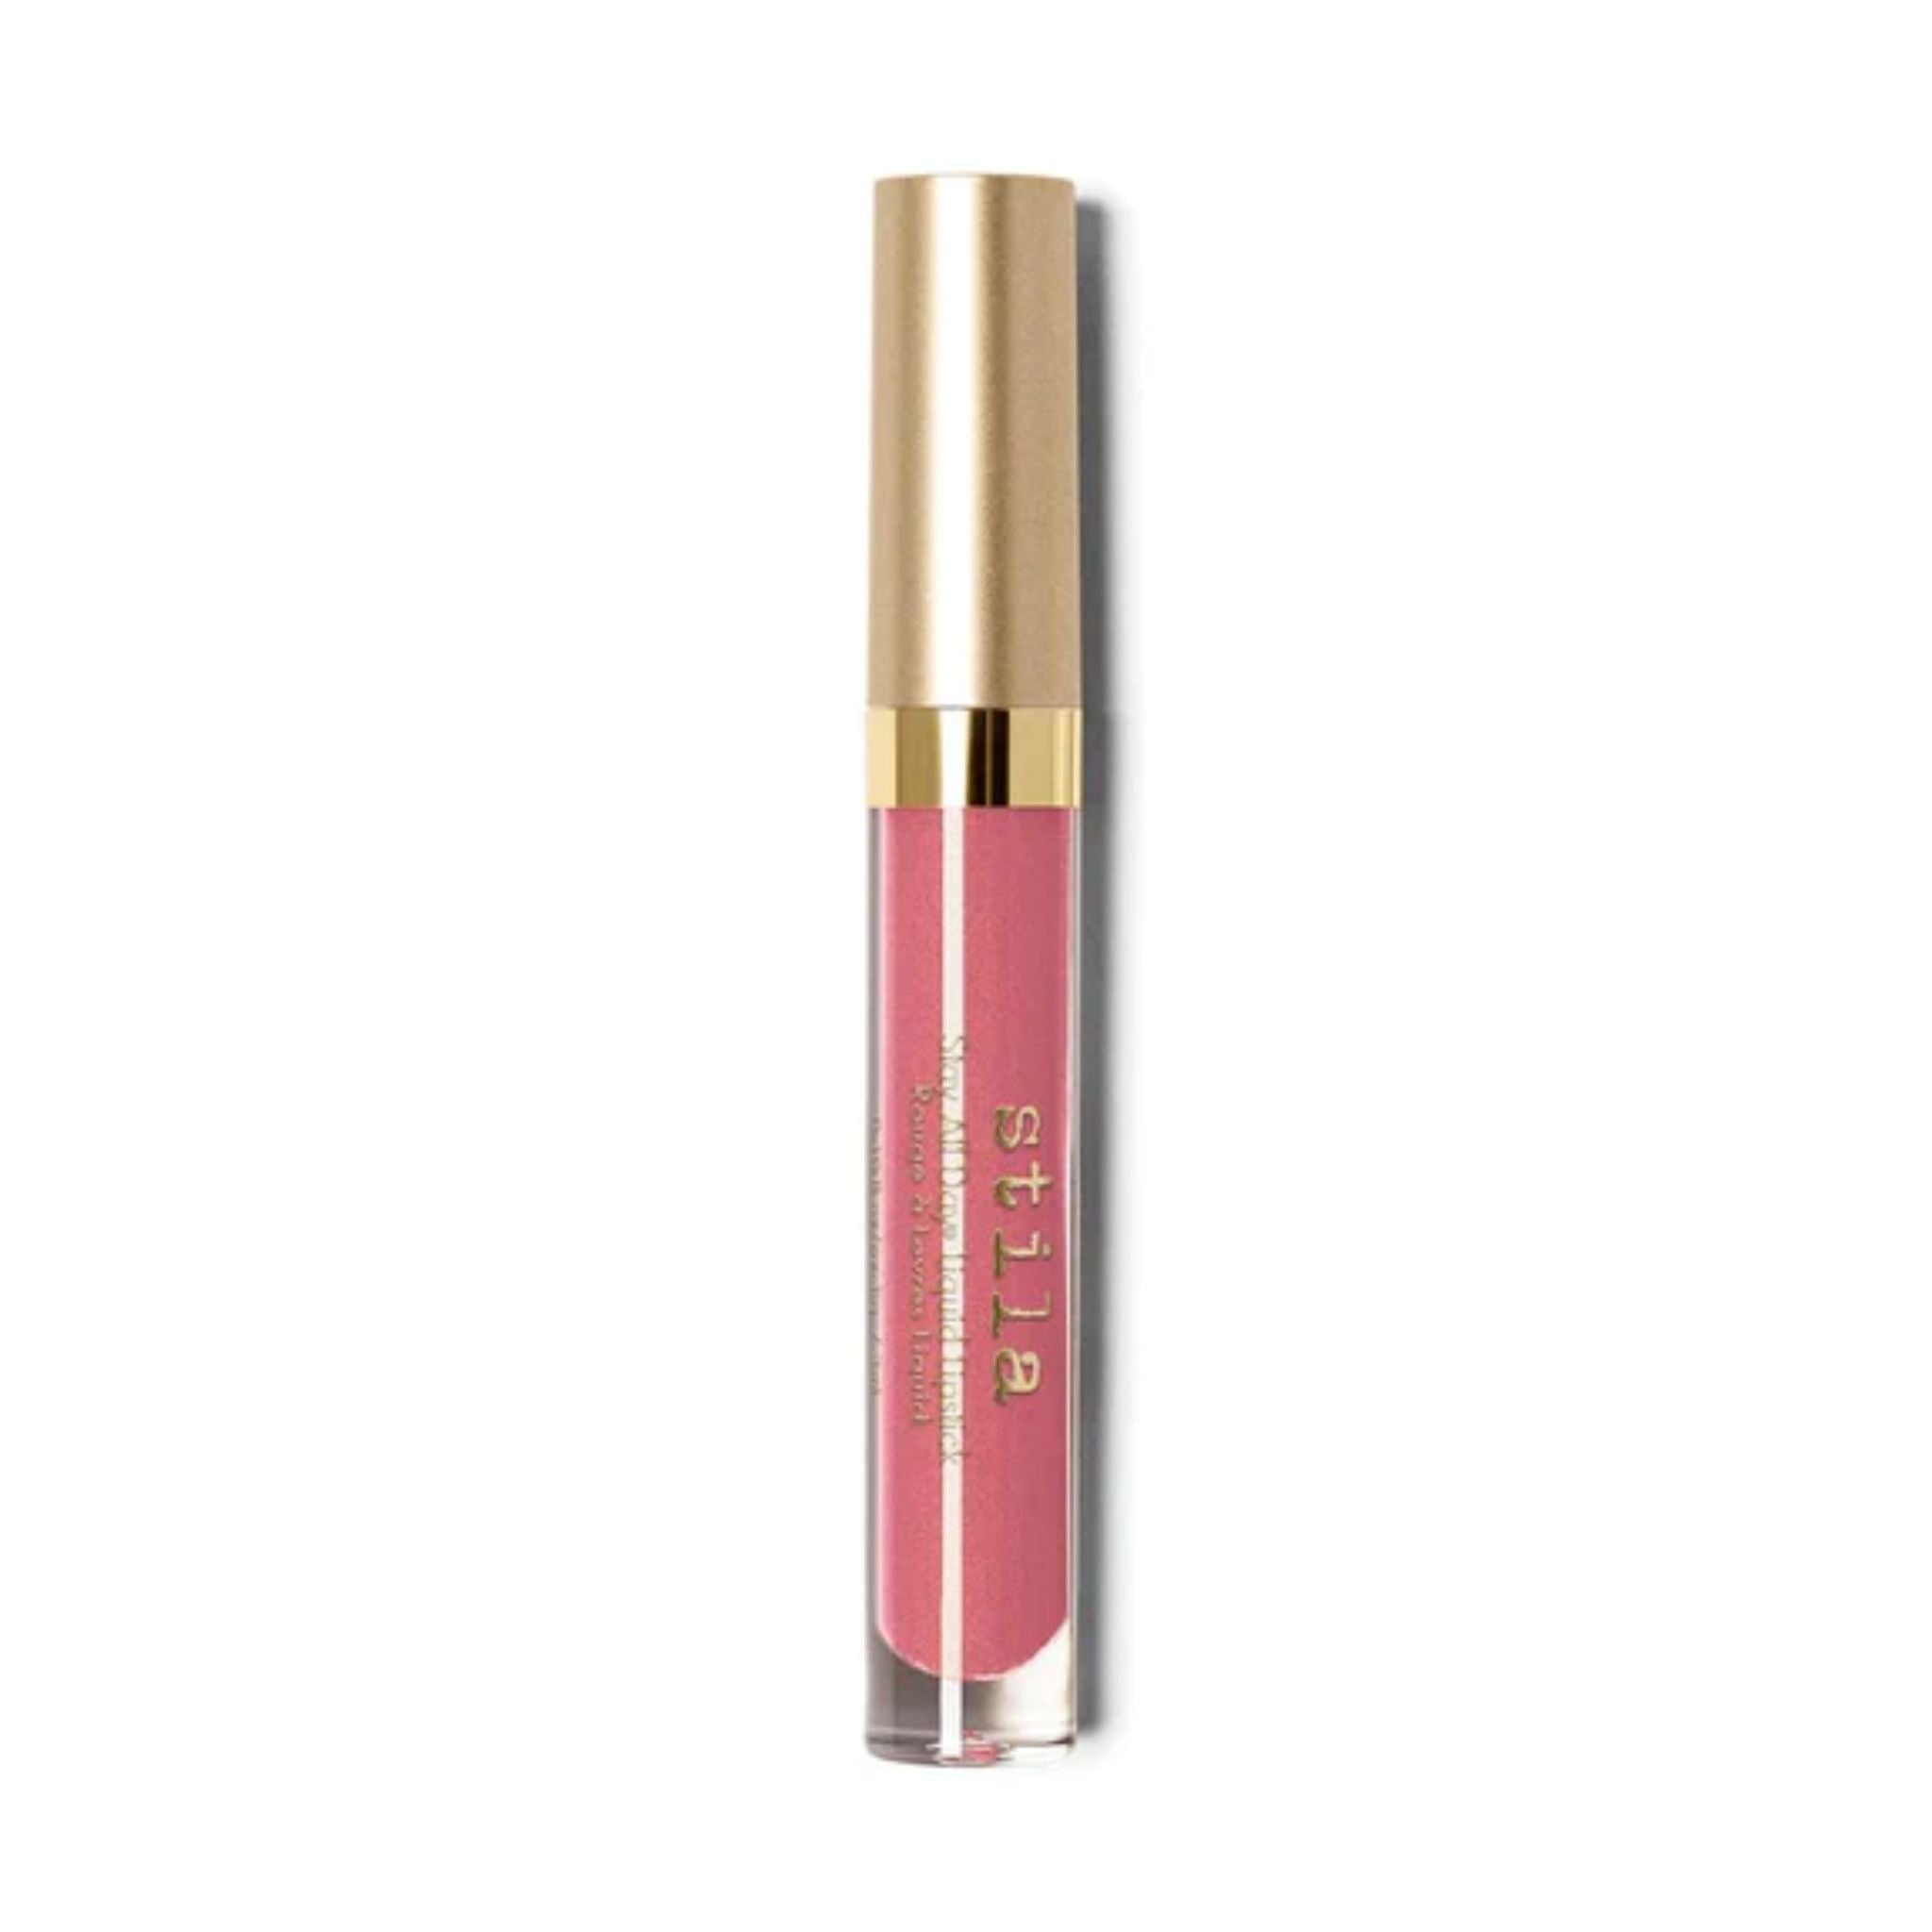 Stila - Shimmer Stay All Day Liquid Lipstick